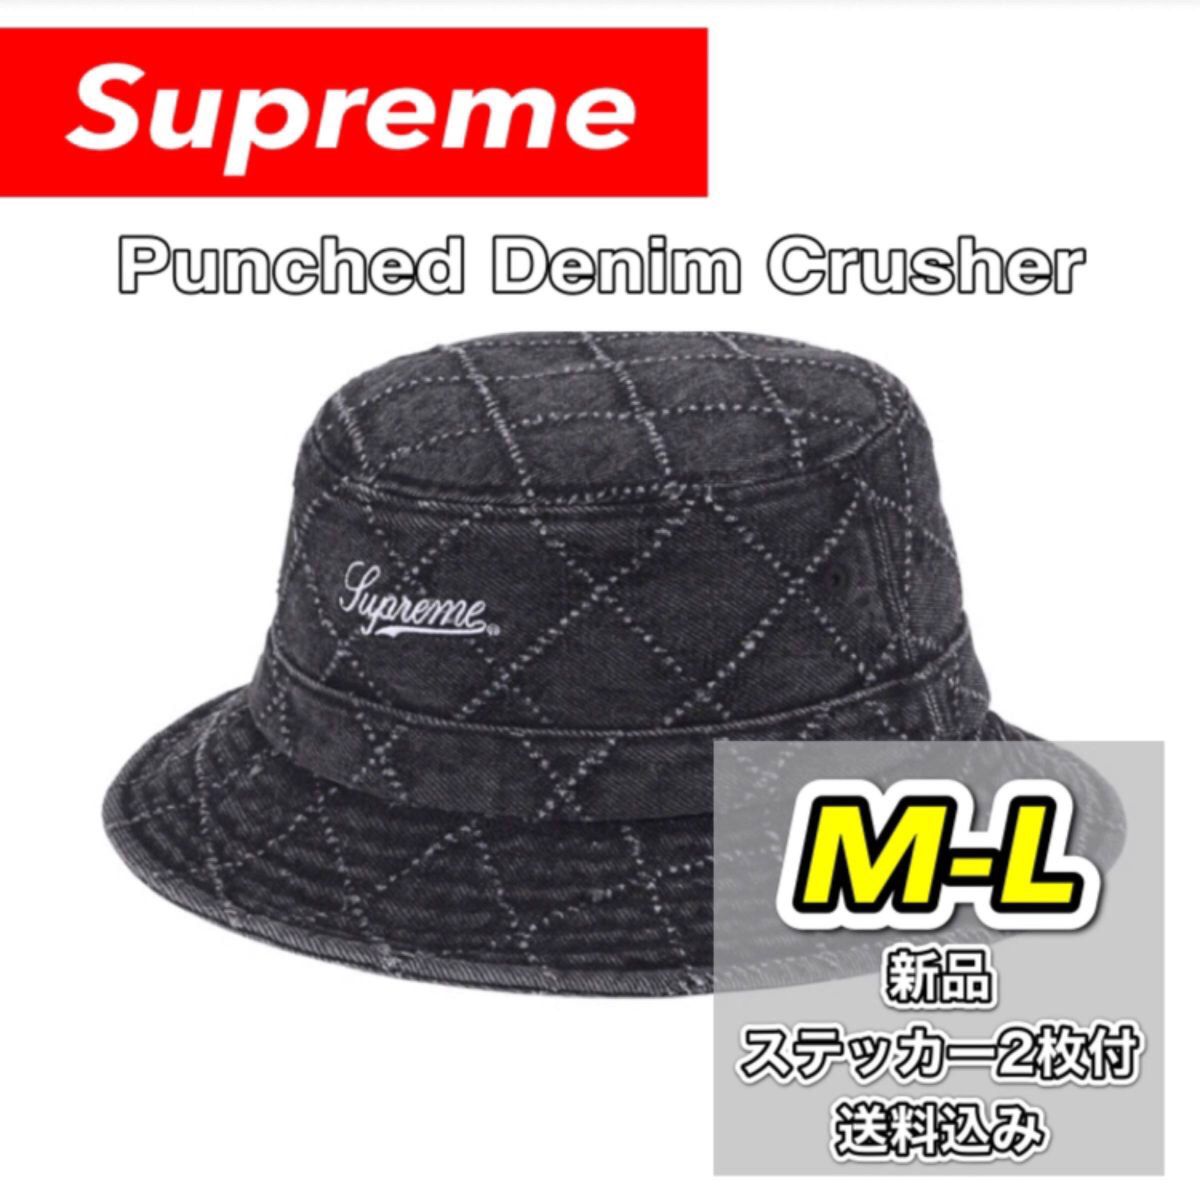 SUPREME Punched Denim Camp Crusher - 帽子